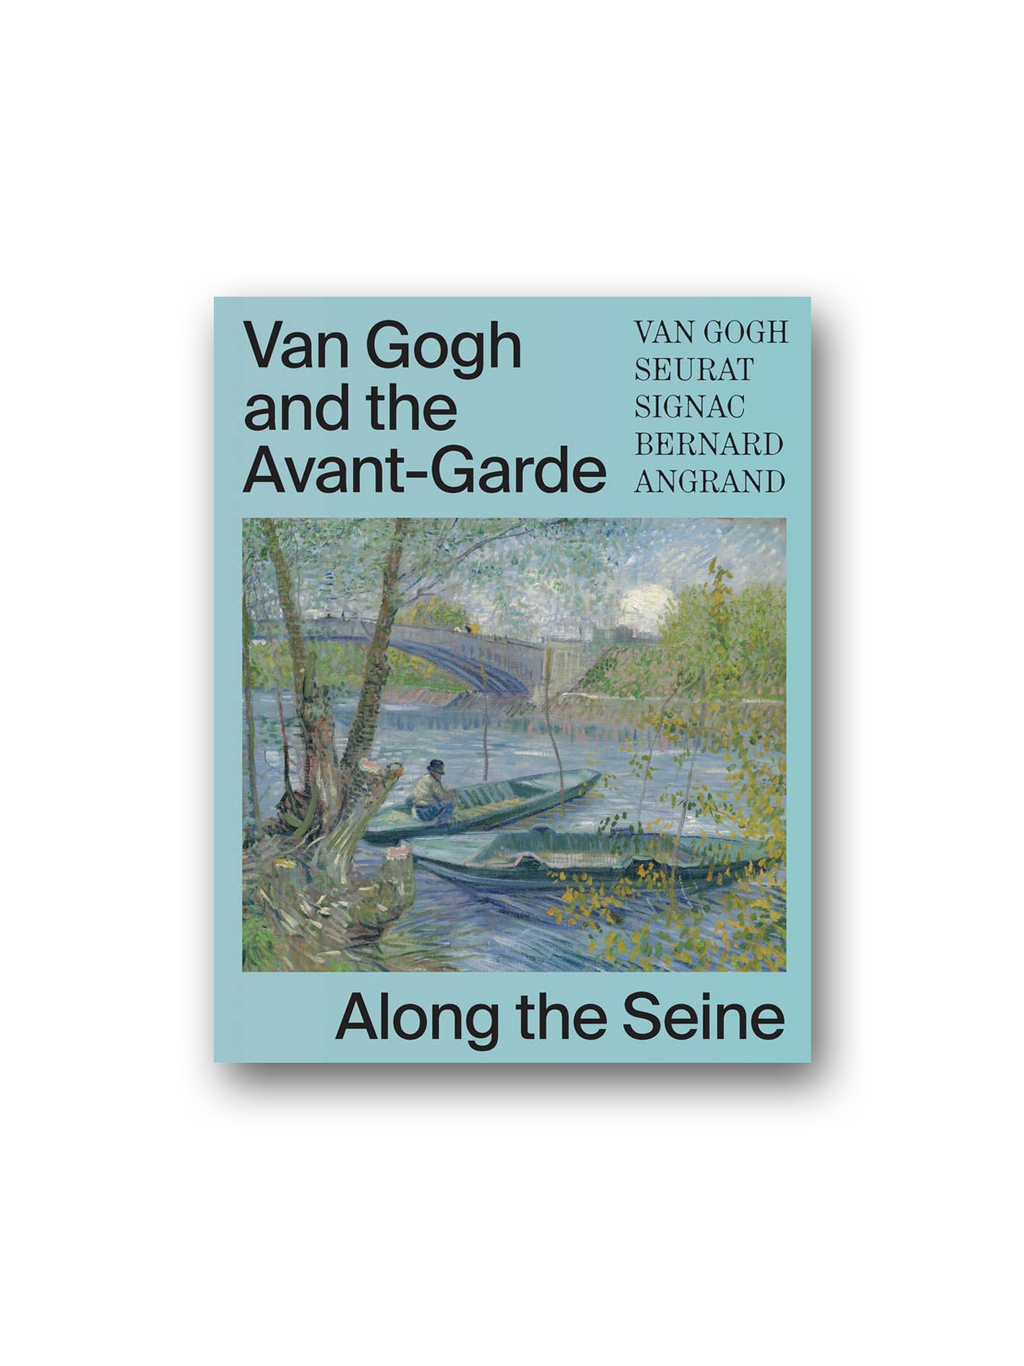 Van Gogh and the Avant-Garde: Along the Seine